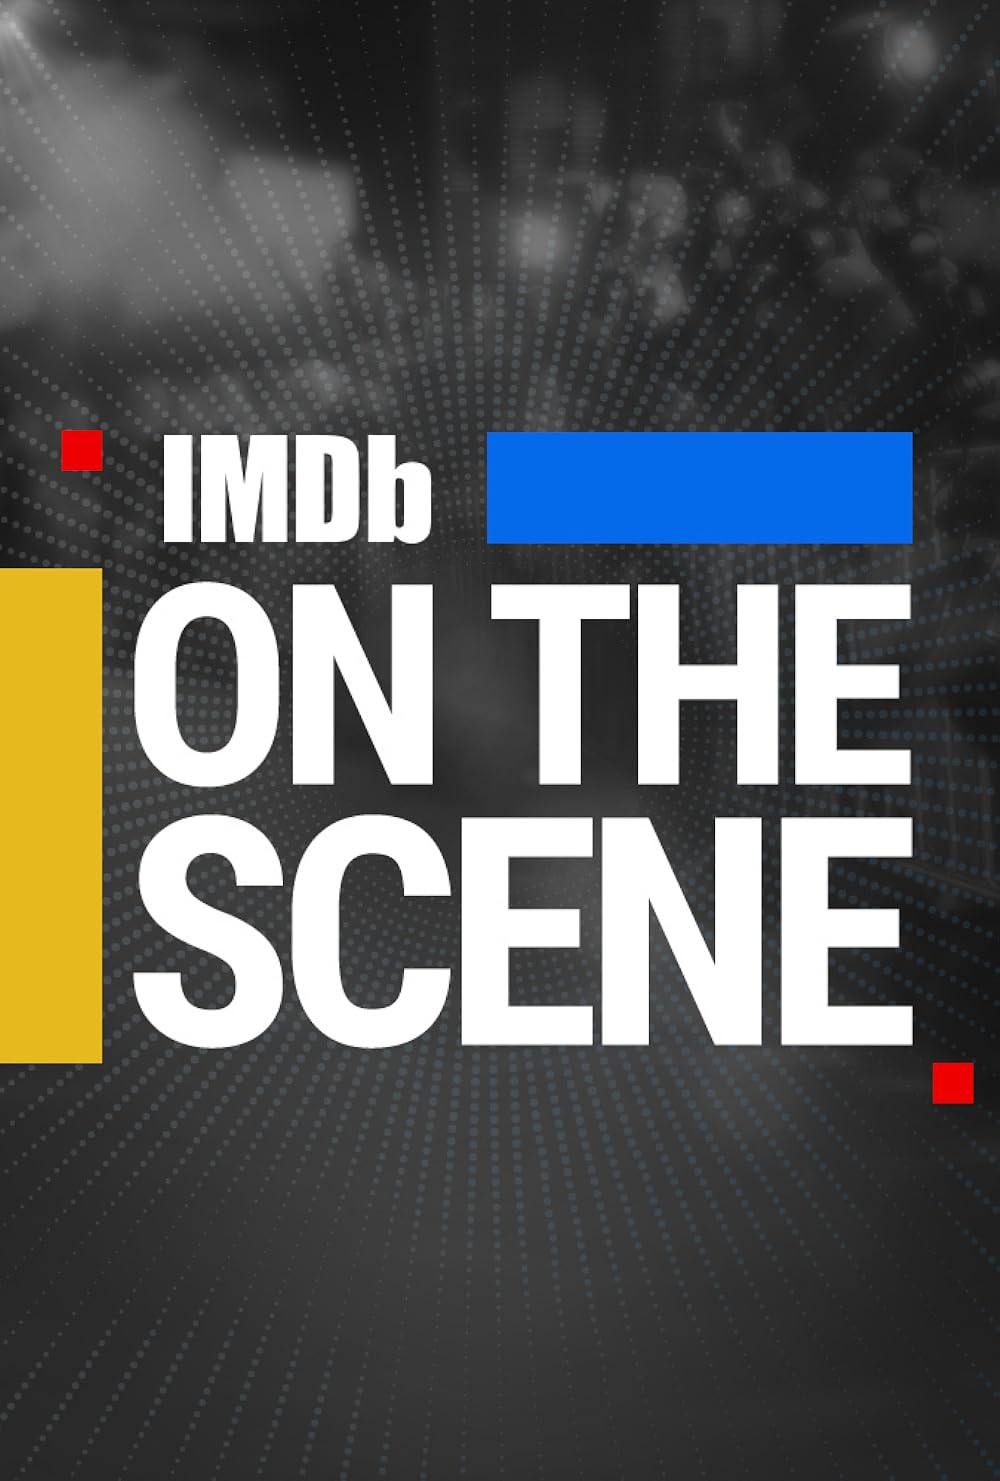 IMDb on the Scene - Interviews